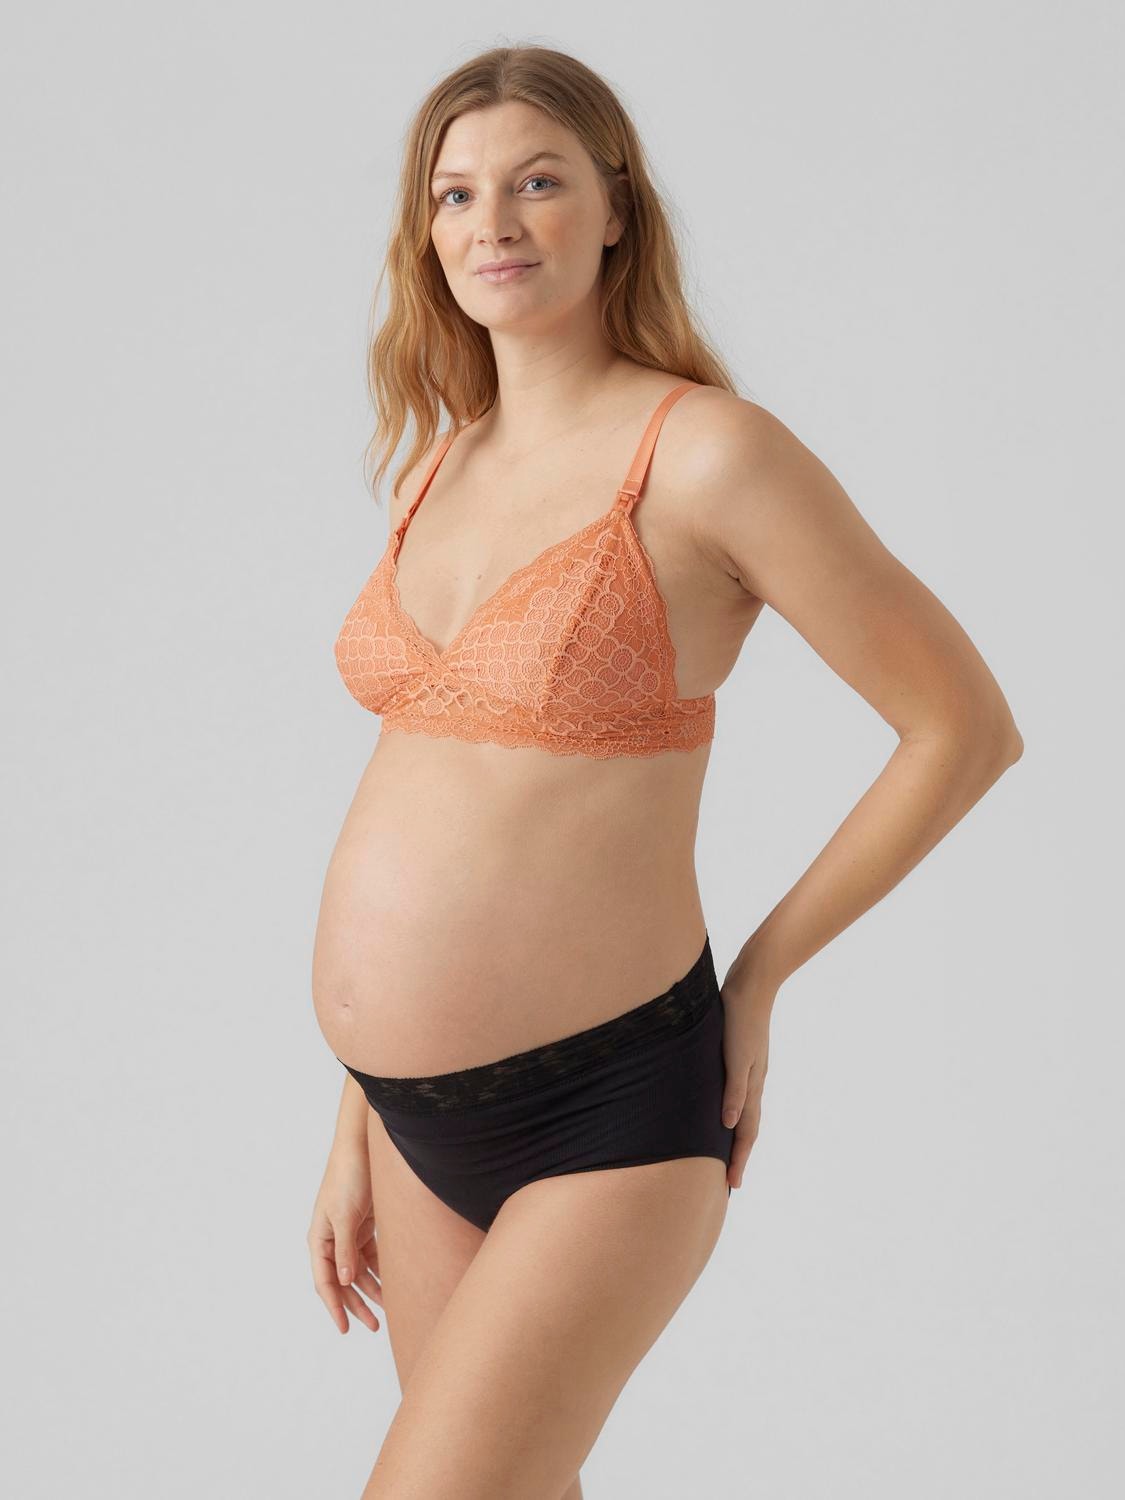 Pack of 2 lace nursing bras - Breastfeeding - Bras - Underwear - CLOTHING -  Woman 